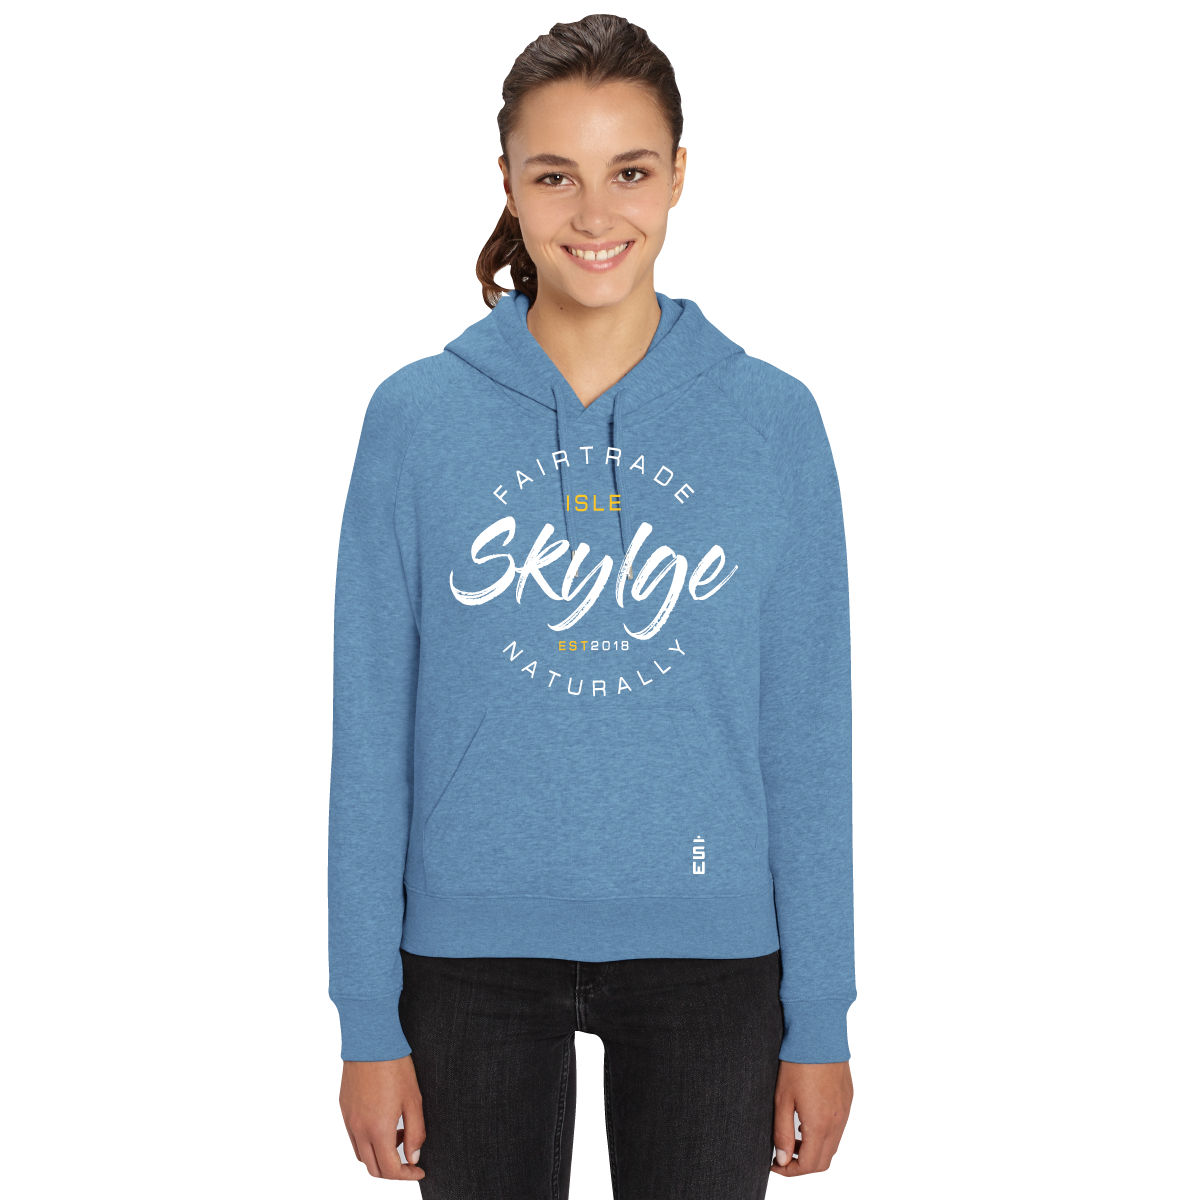 afbeelding van blauwe hooded sweater van Skylgewear voor dames